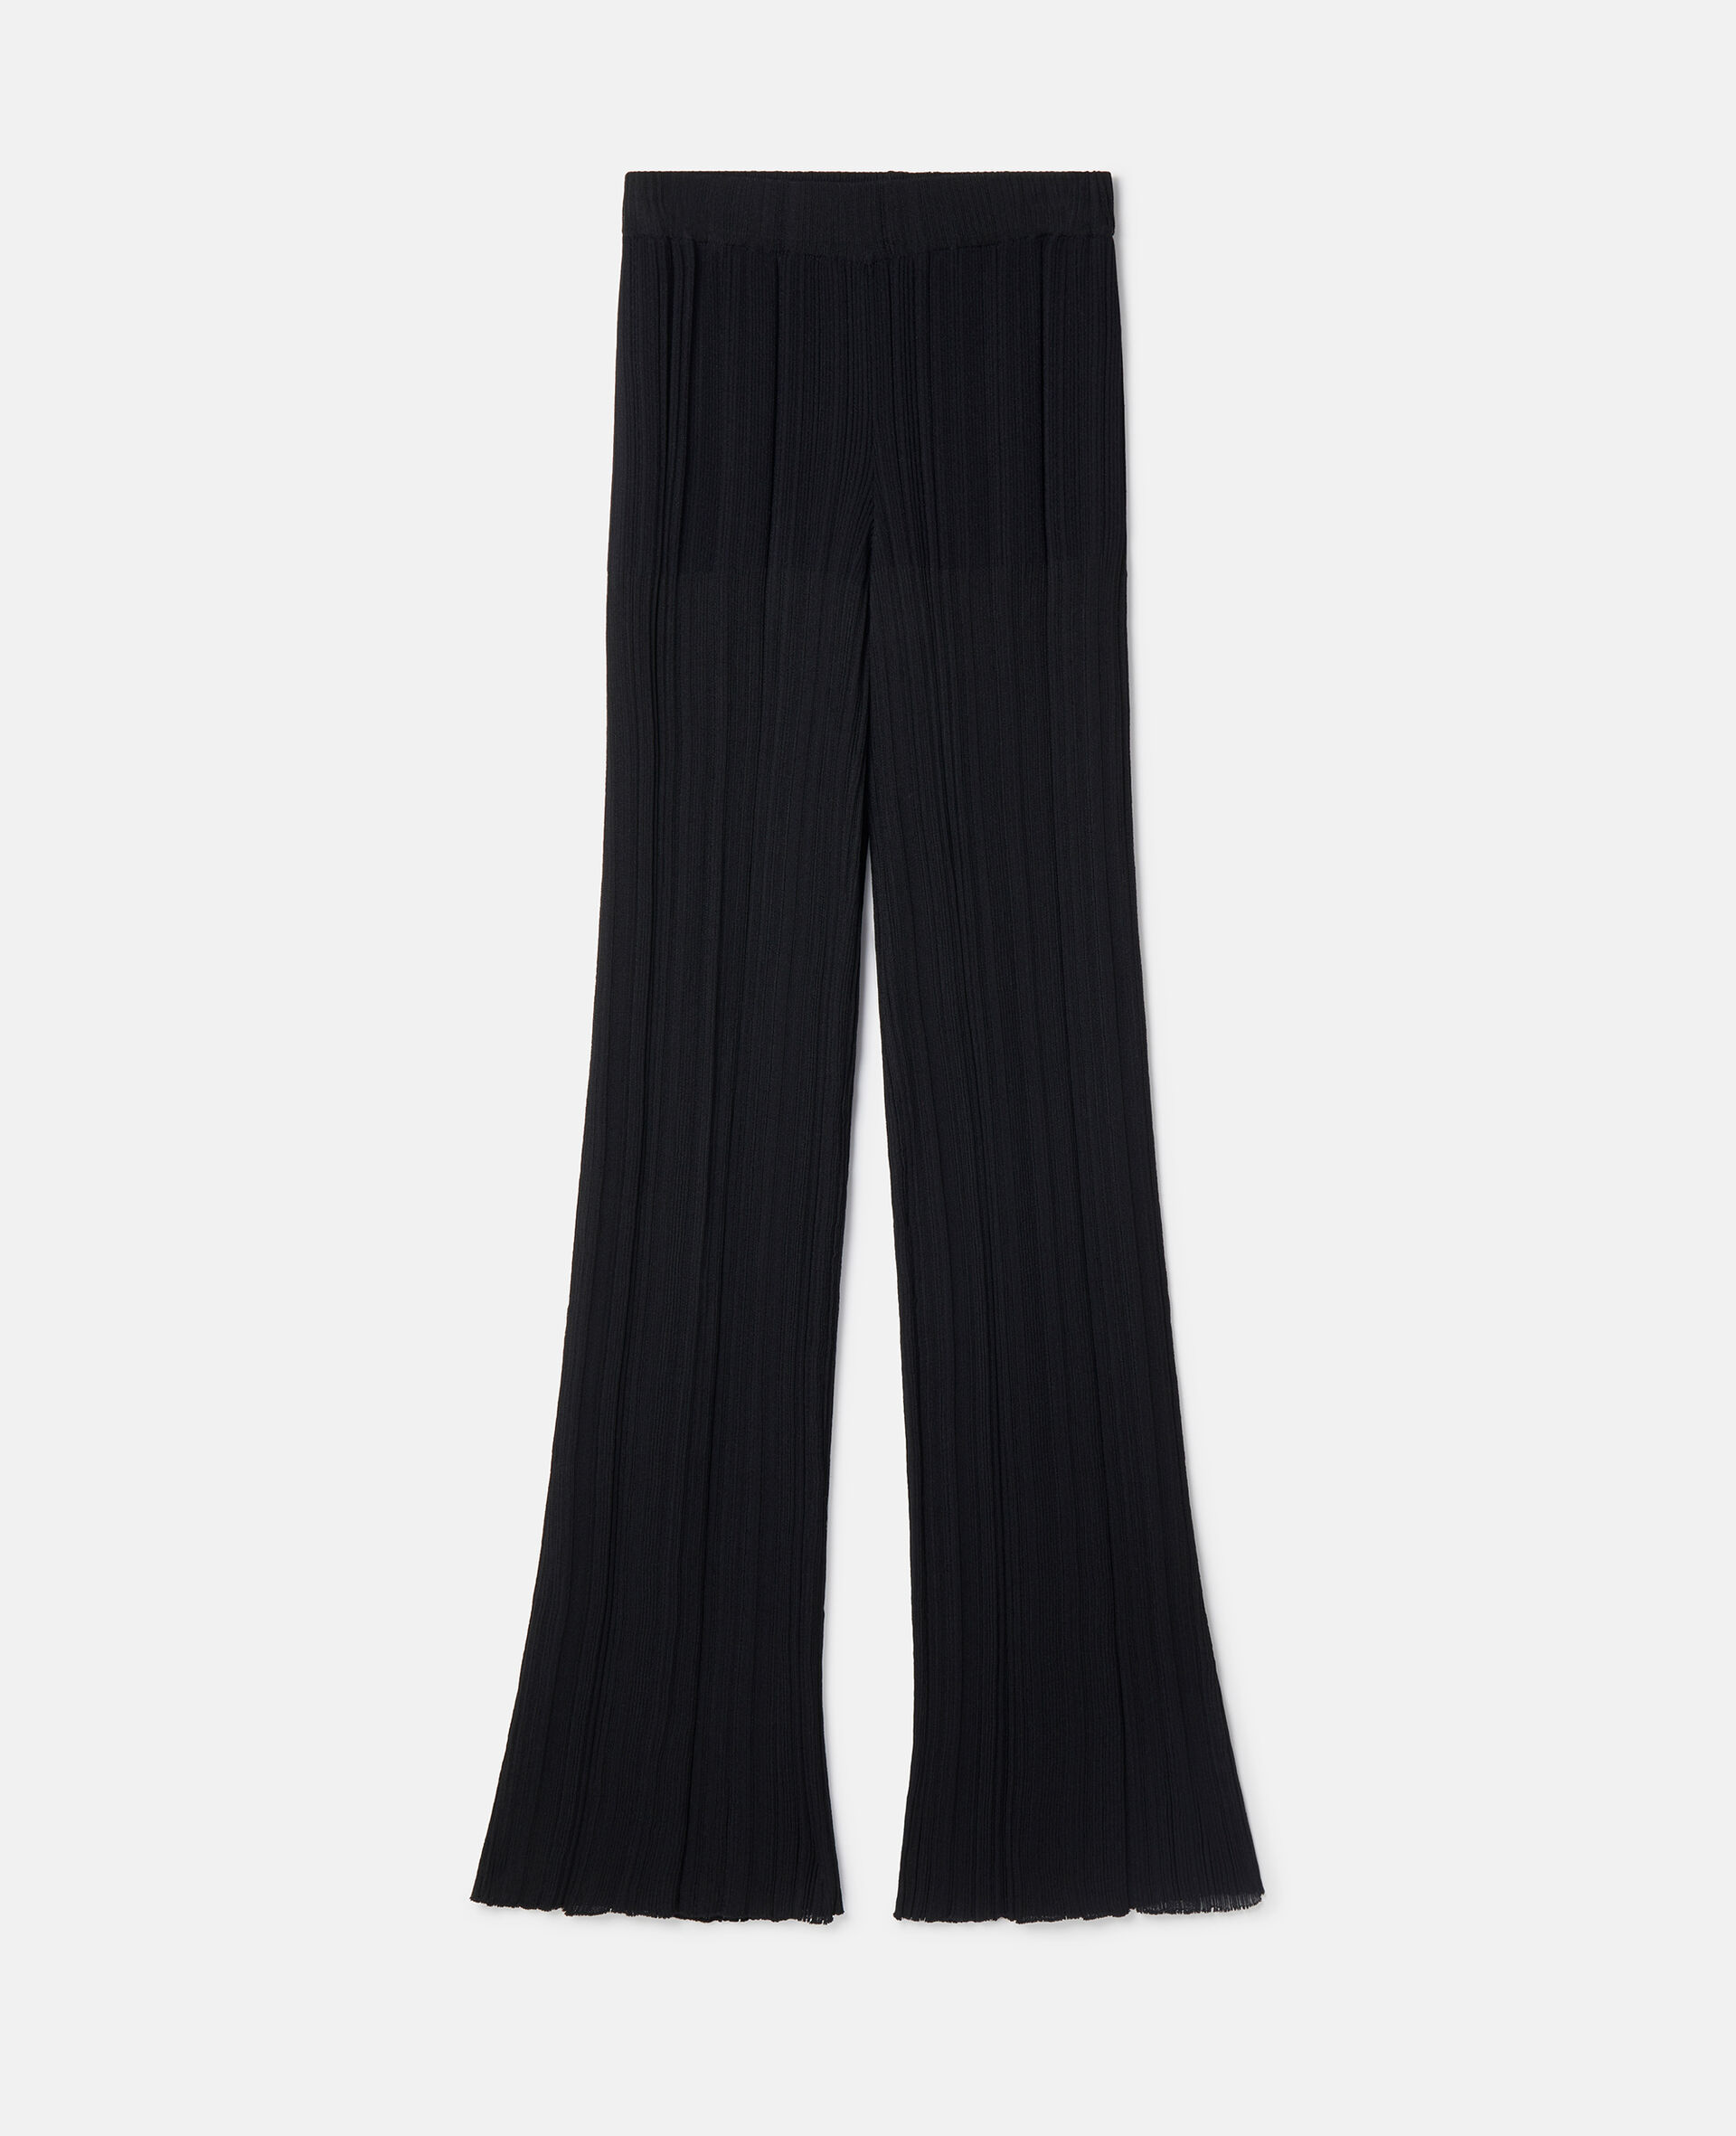 Plisse Pleat Knit Trousers-Black-medium